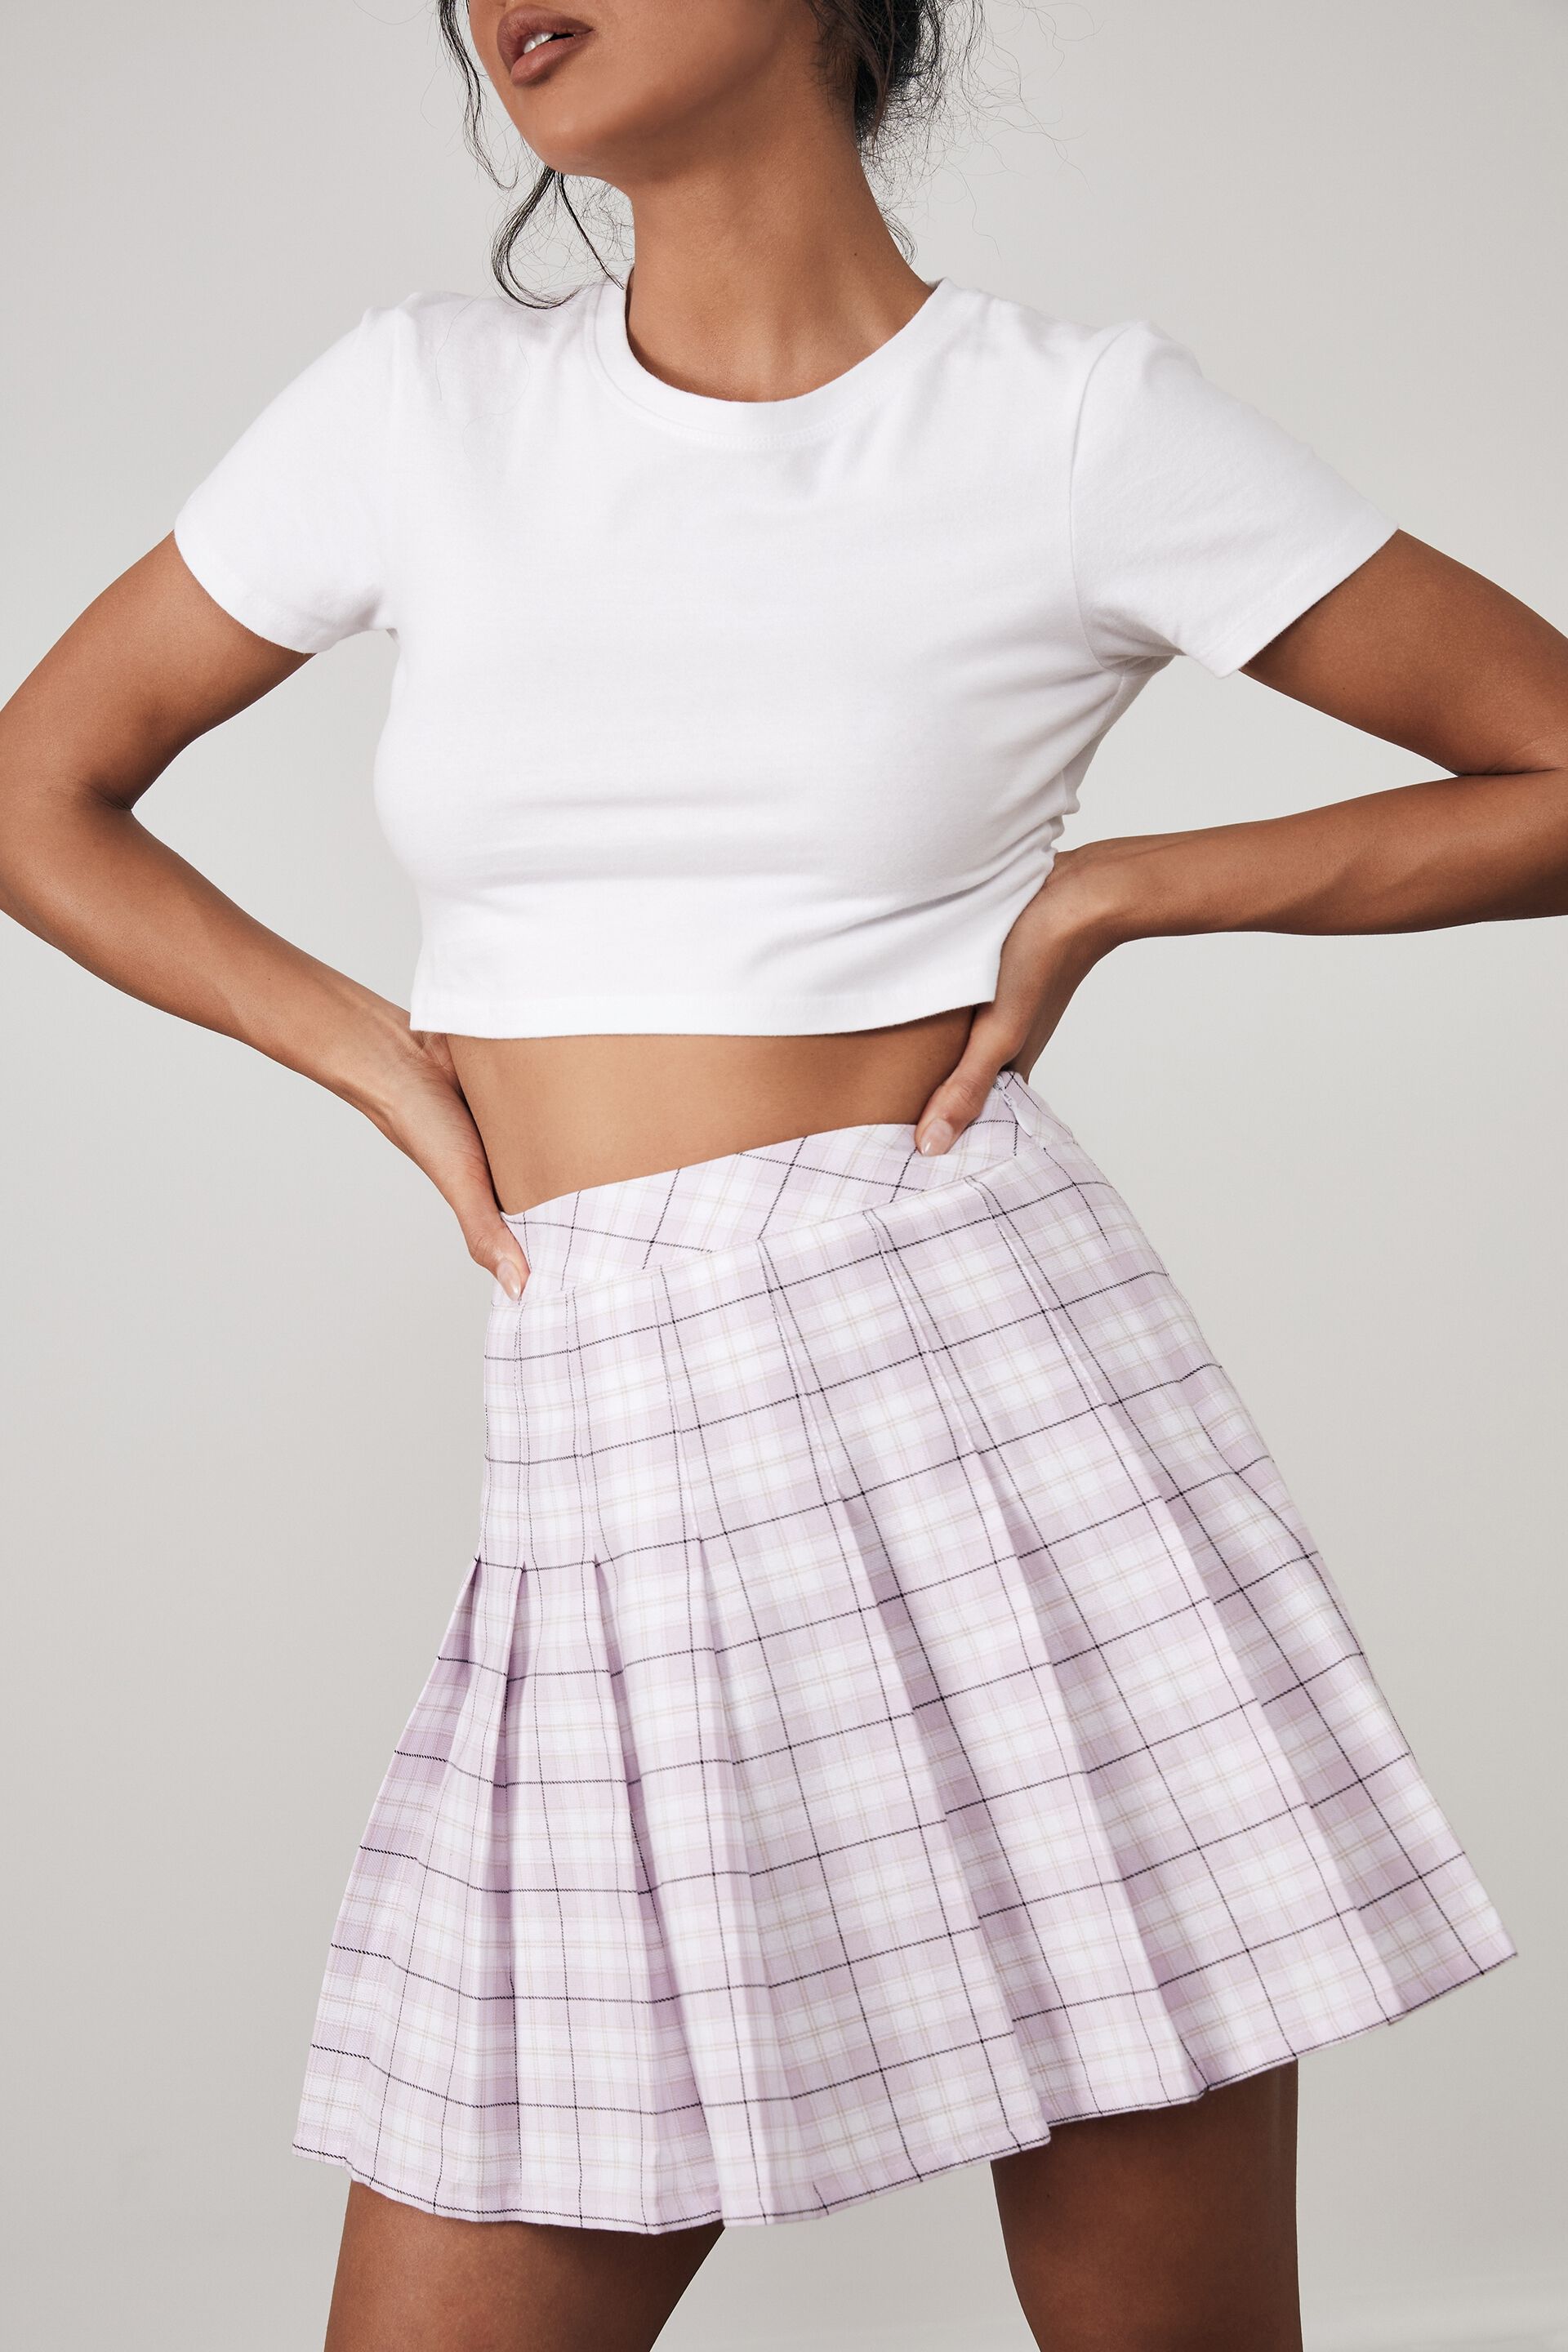 white pleated skirt cotton on